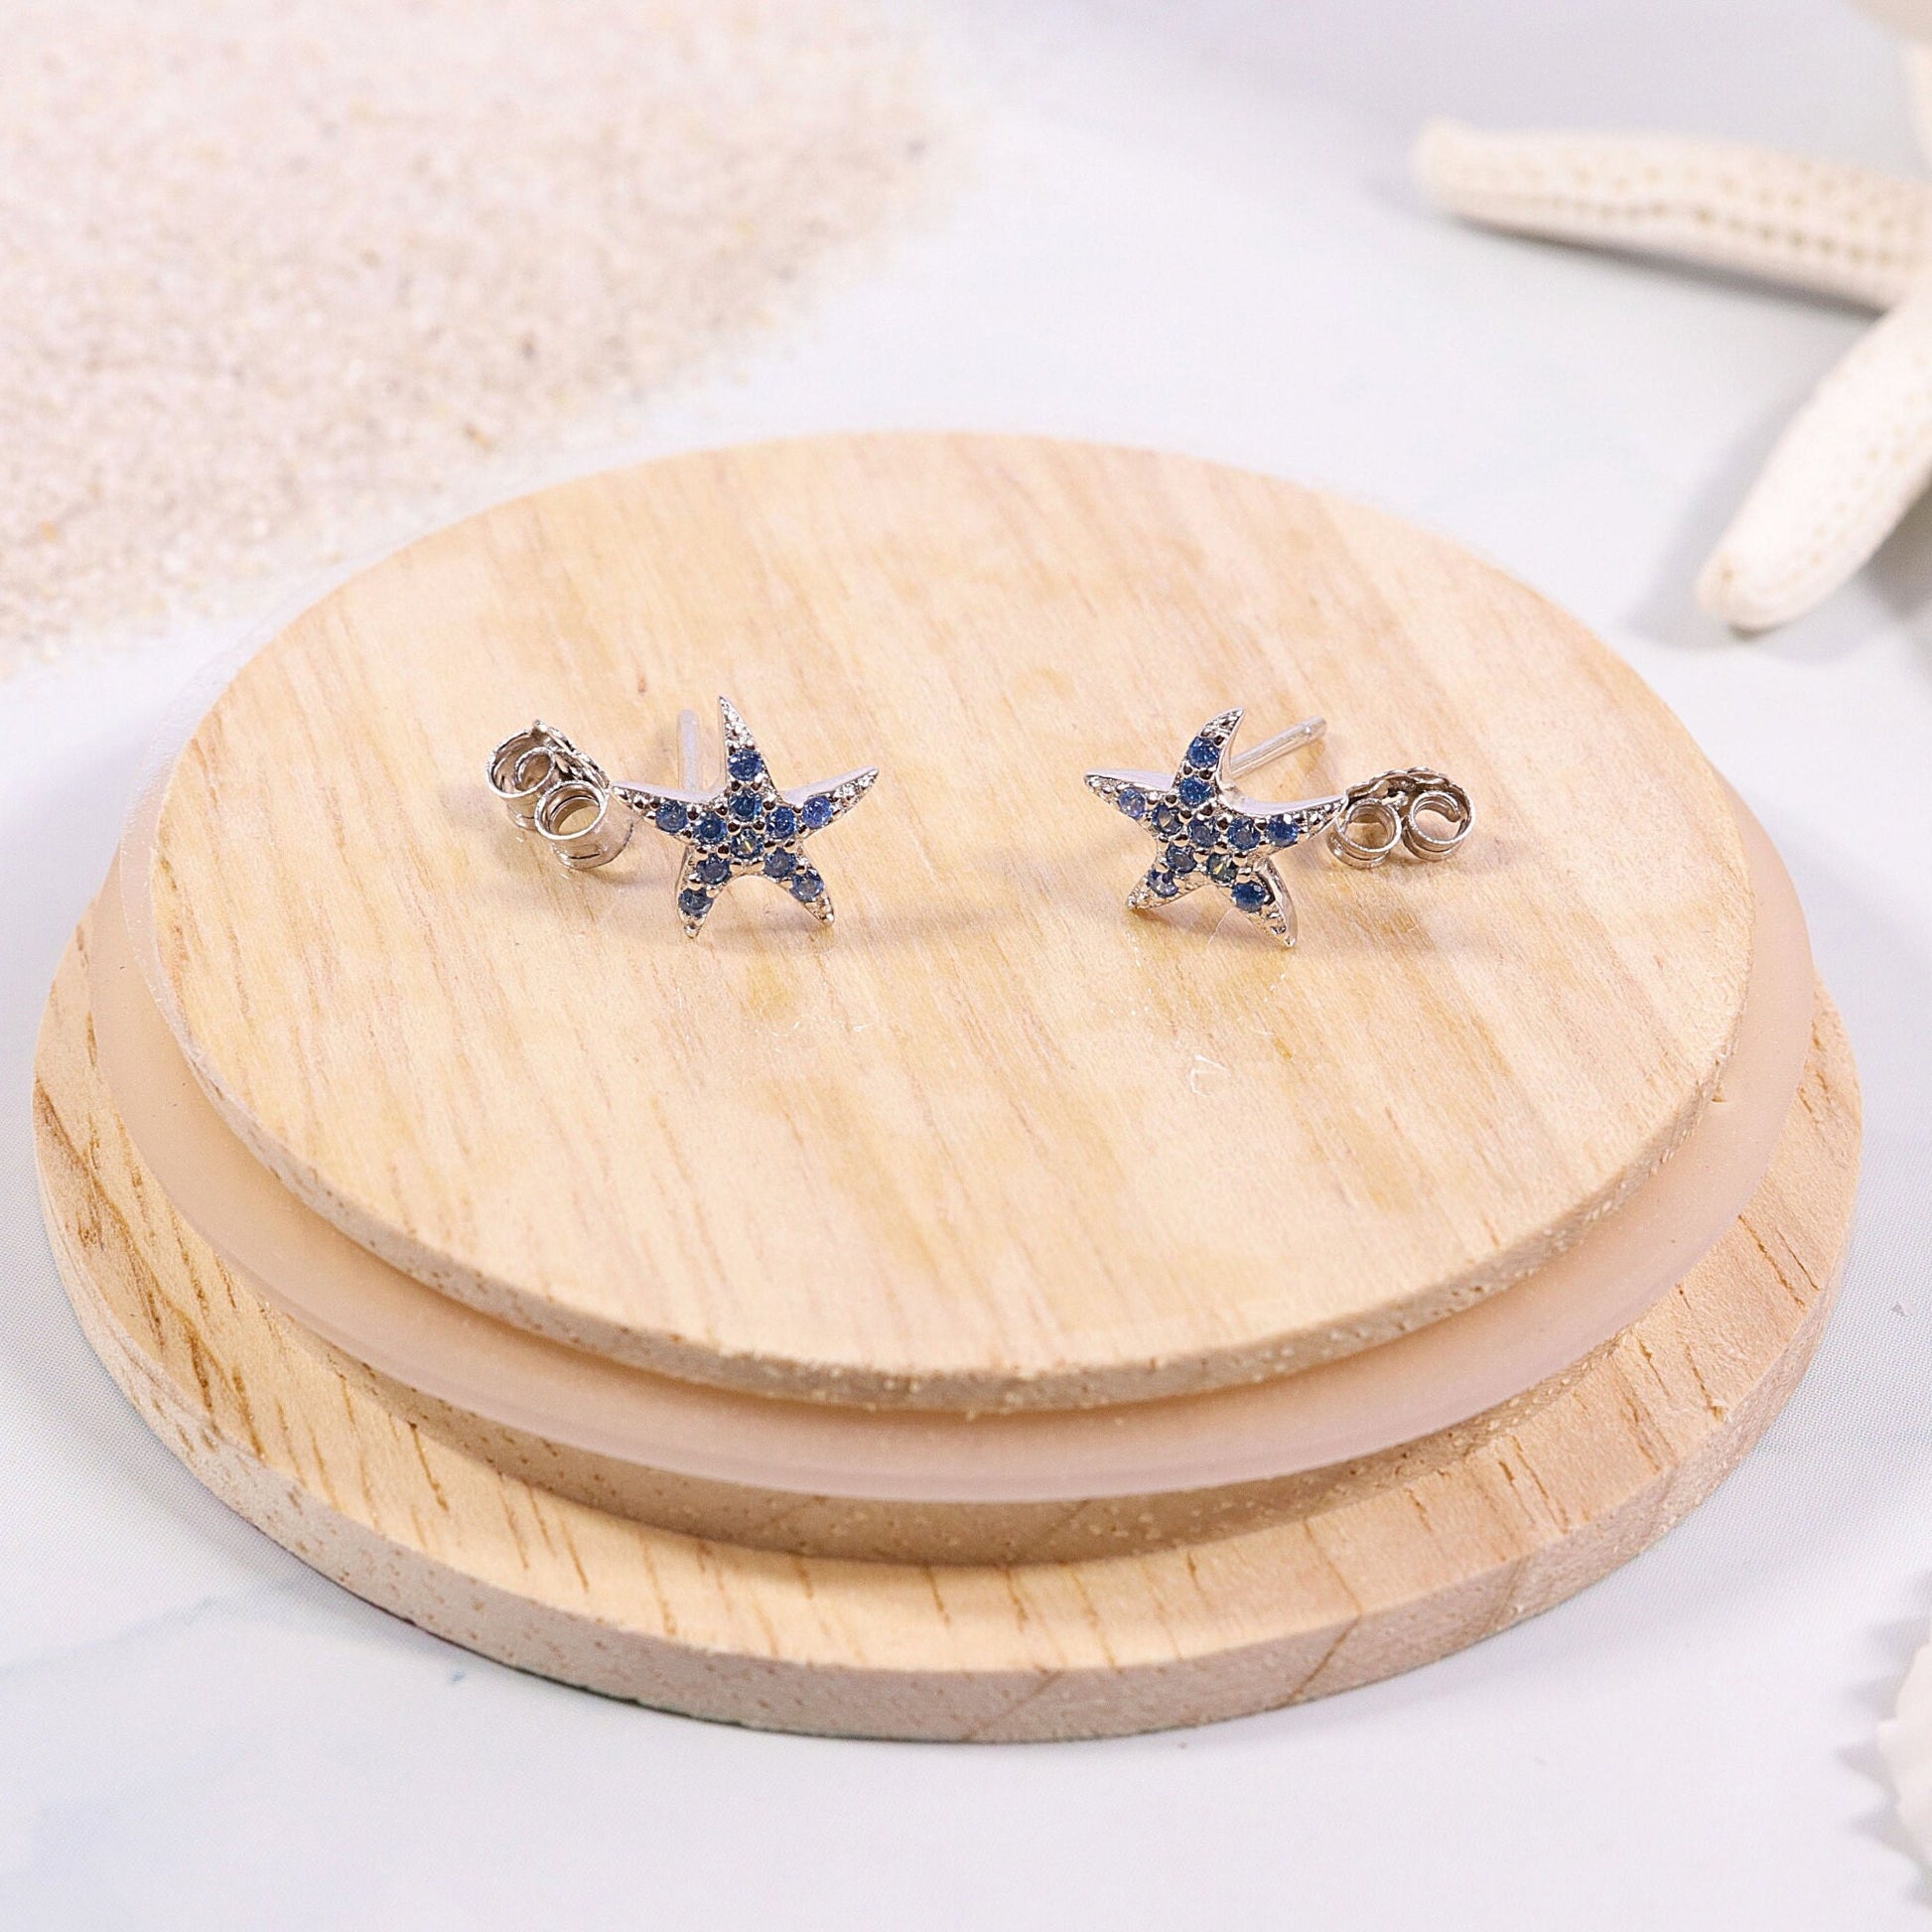 Genuine Blue Topaz Earrings, Sea Star Earrings, Crystal Earrings, Sterling Silver, Starfish Studs, Handmade Jewelry